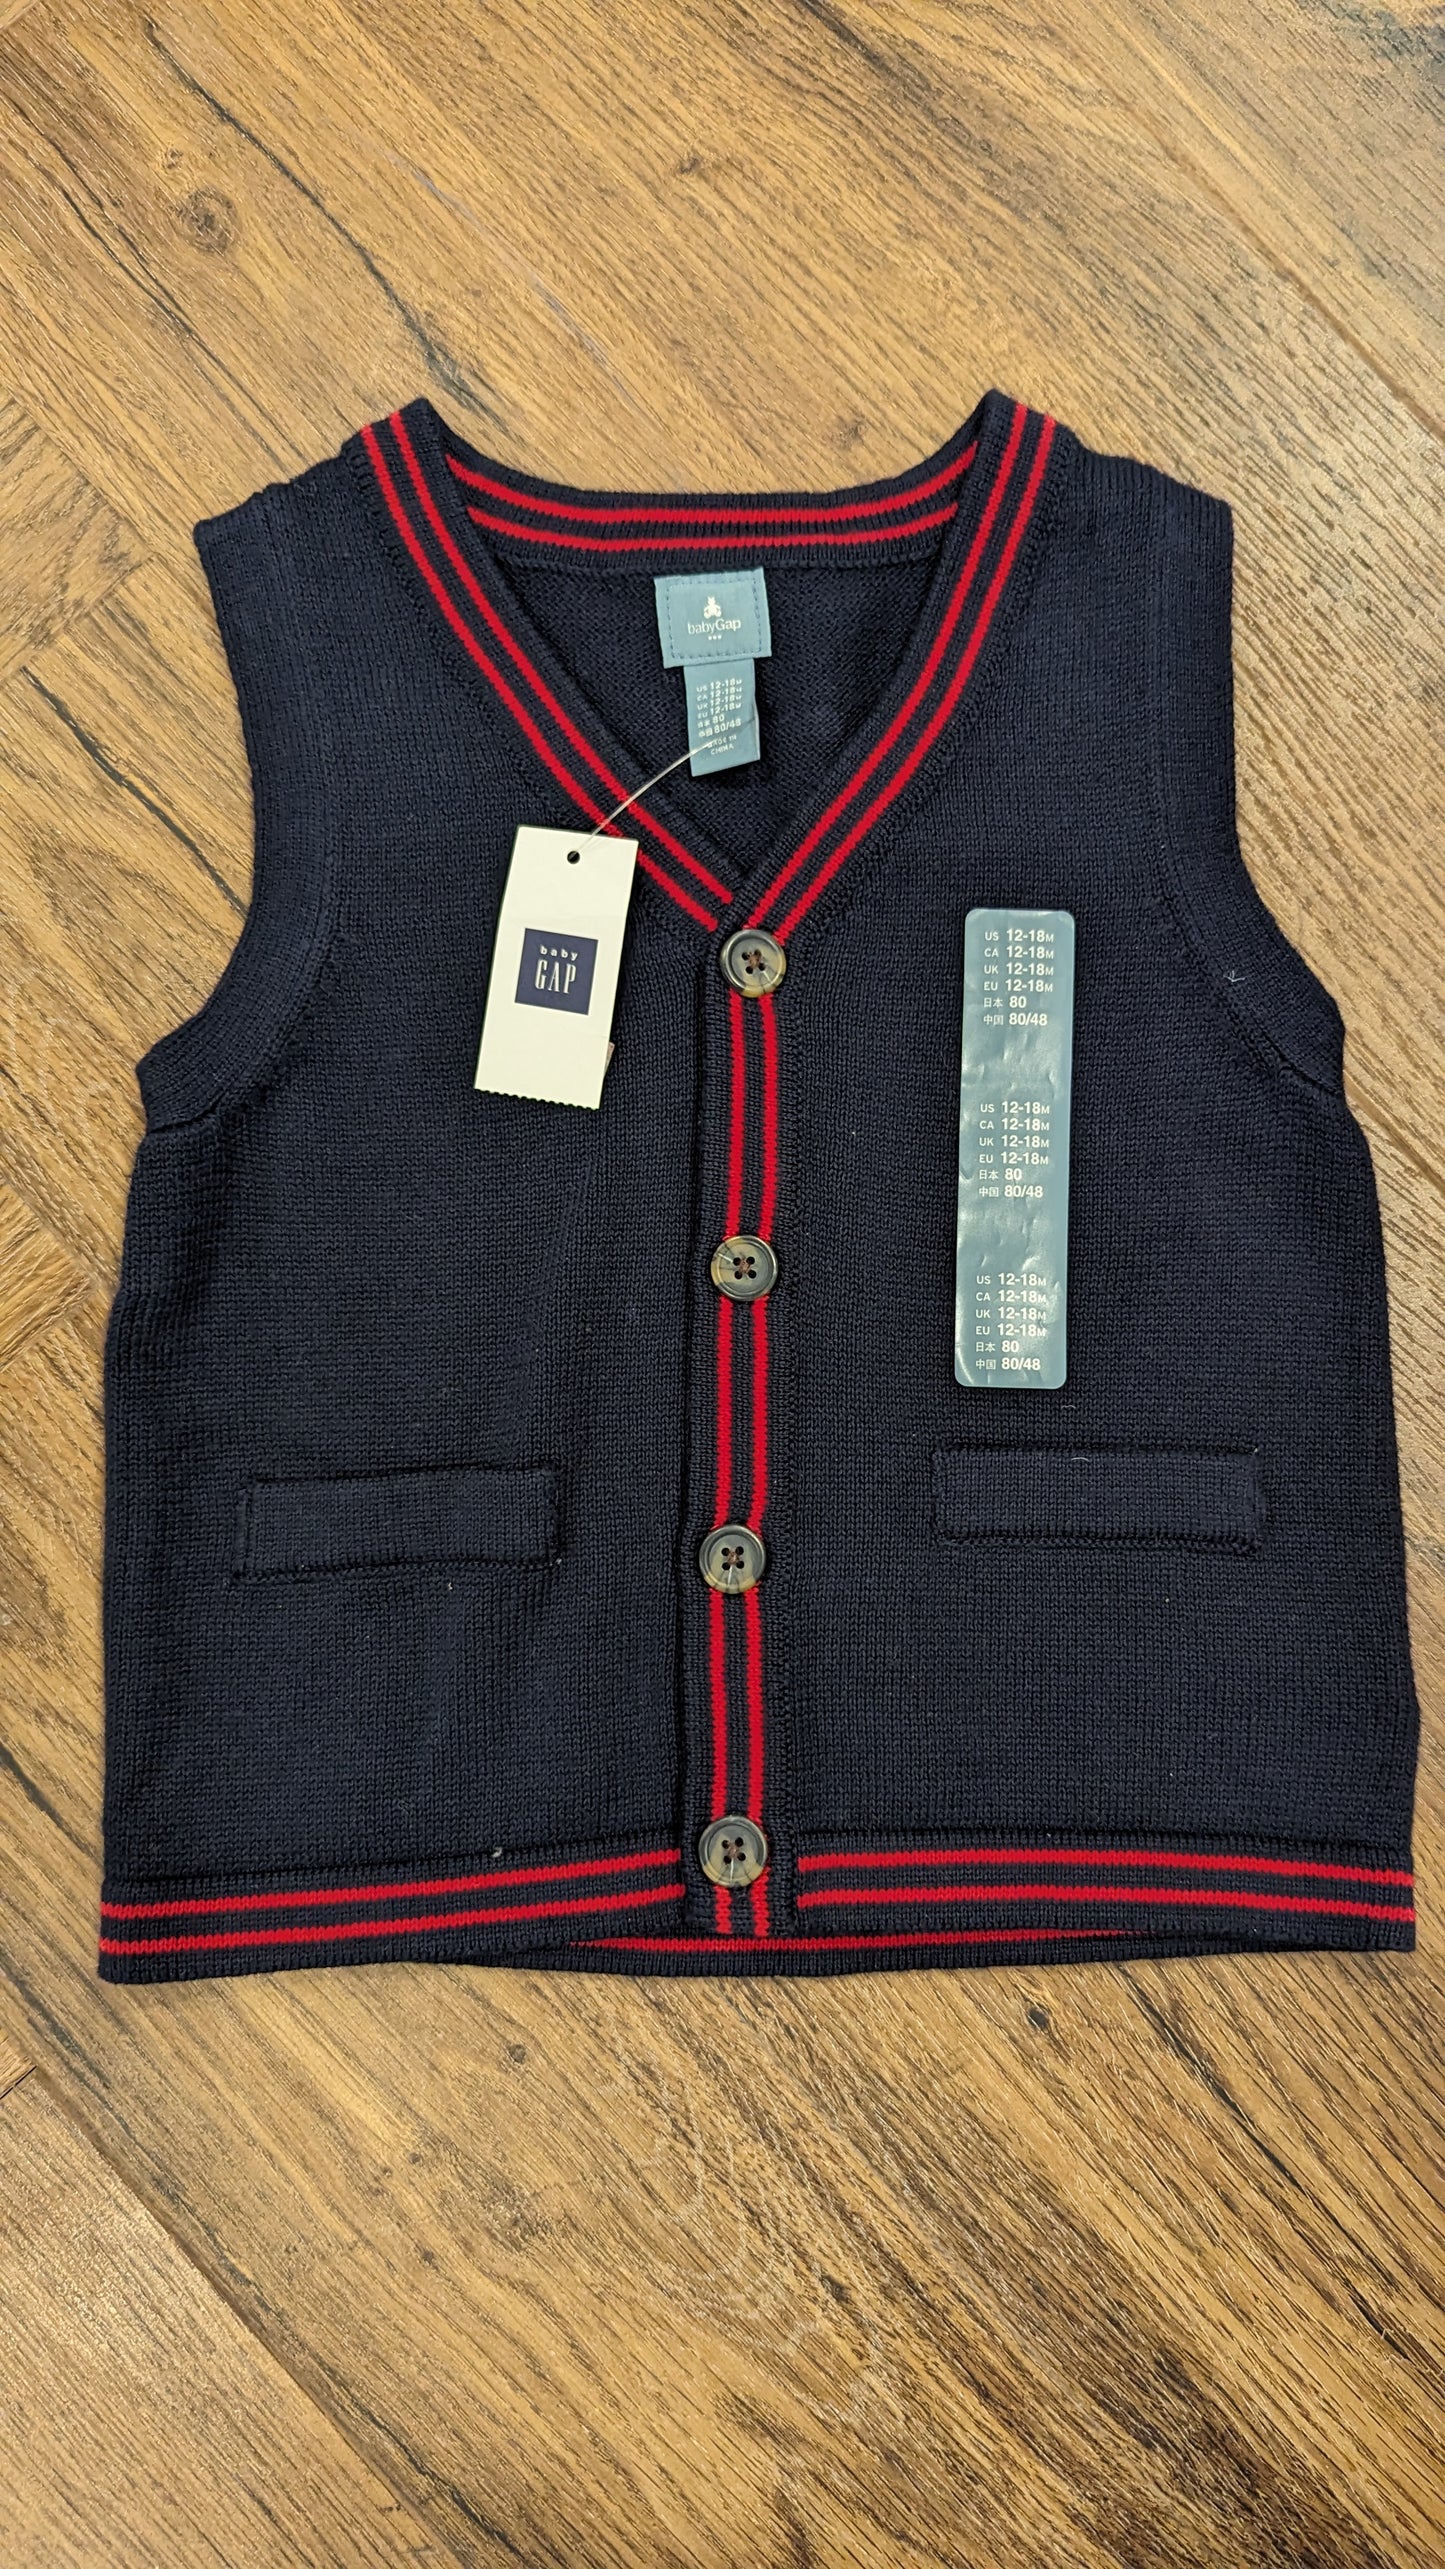 Gap navy/red sweater vest, 12-18 months, NWT